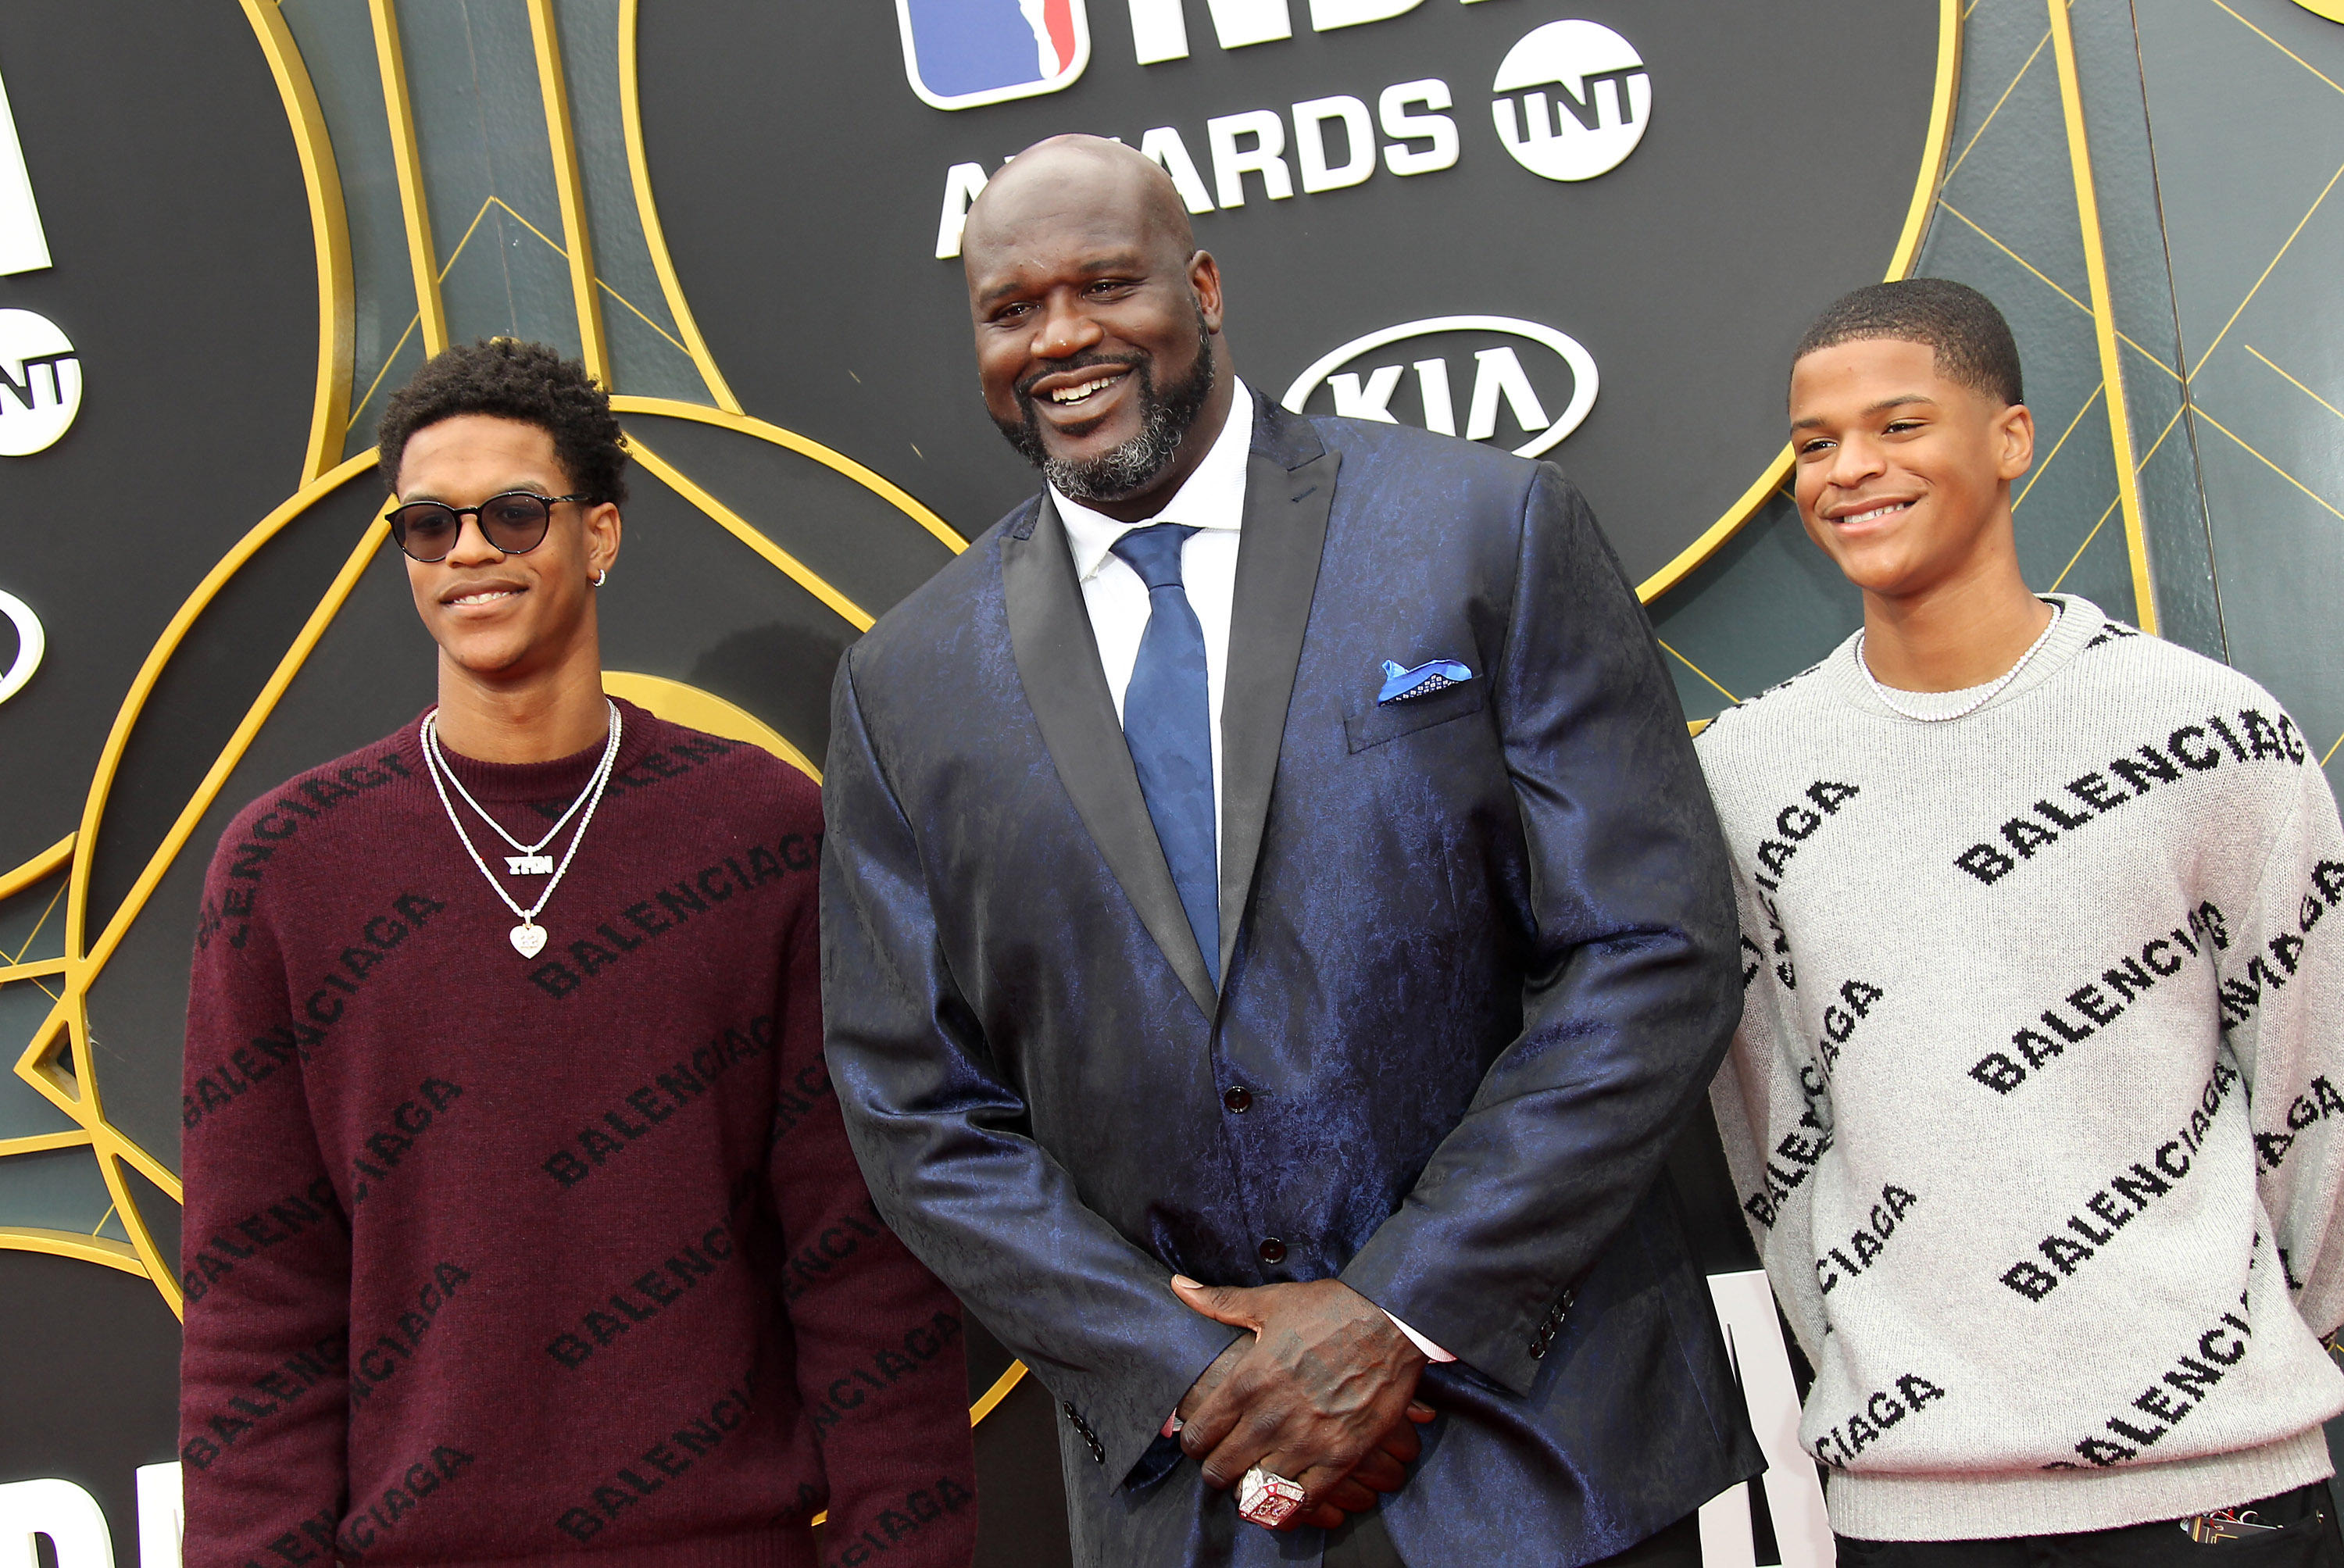 NBA Awards 2019 - Arrivals